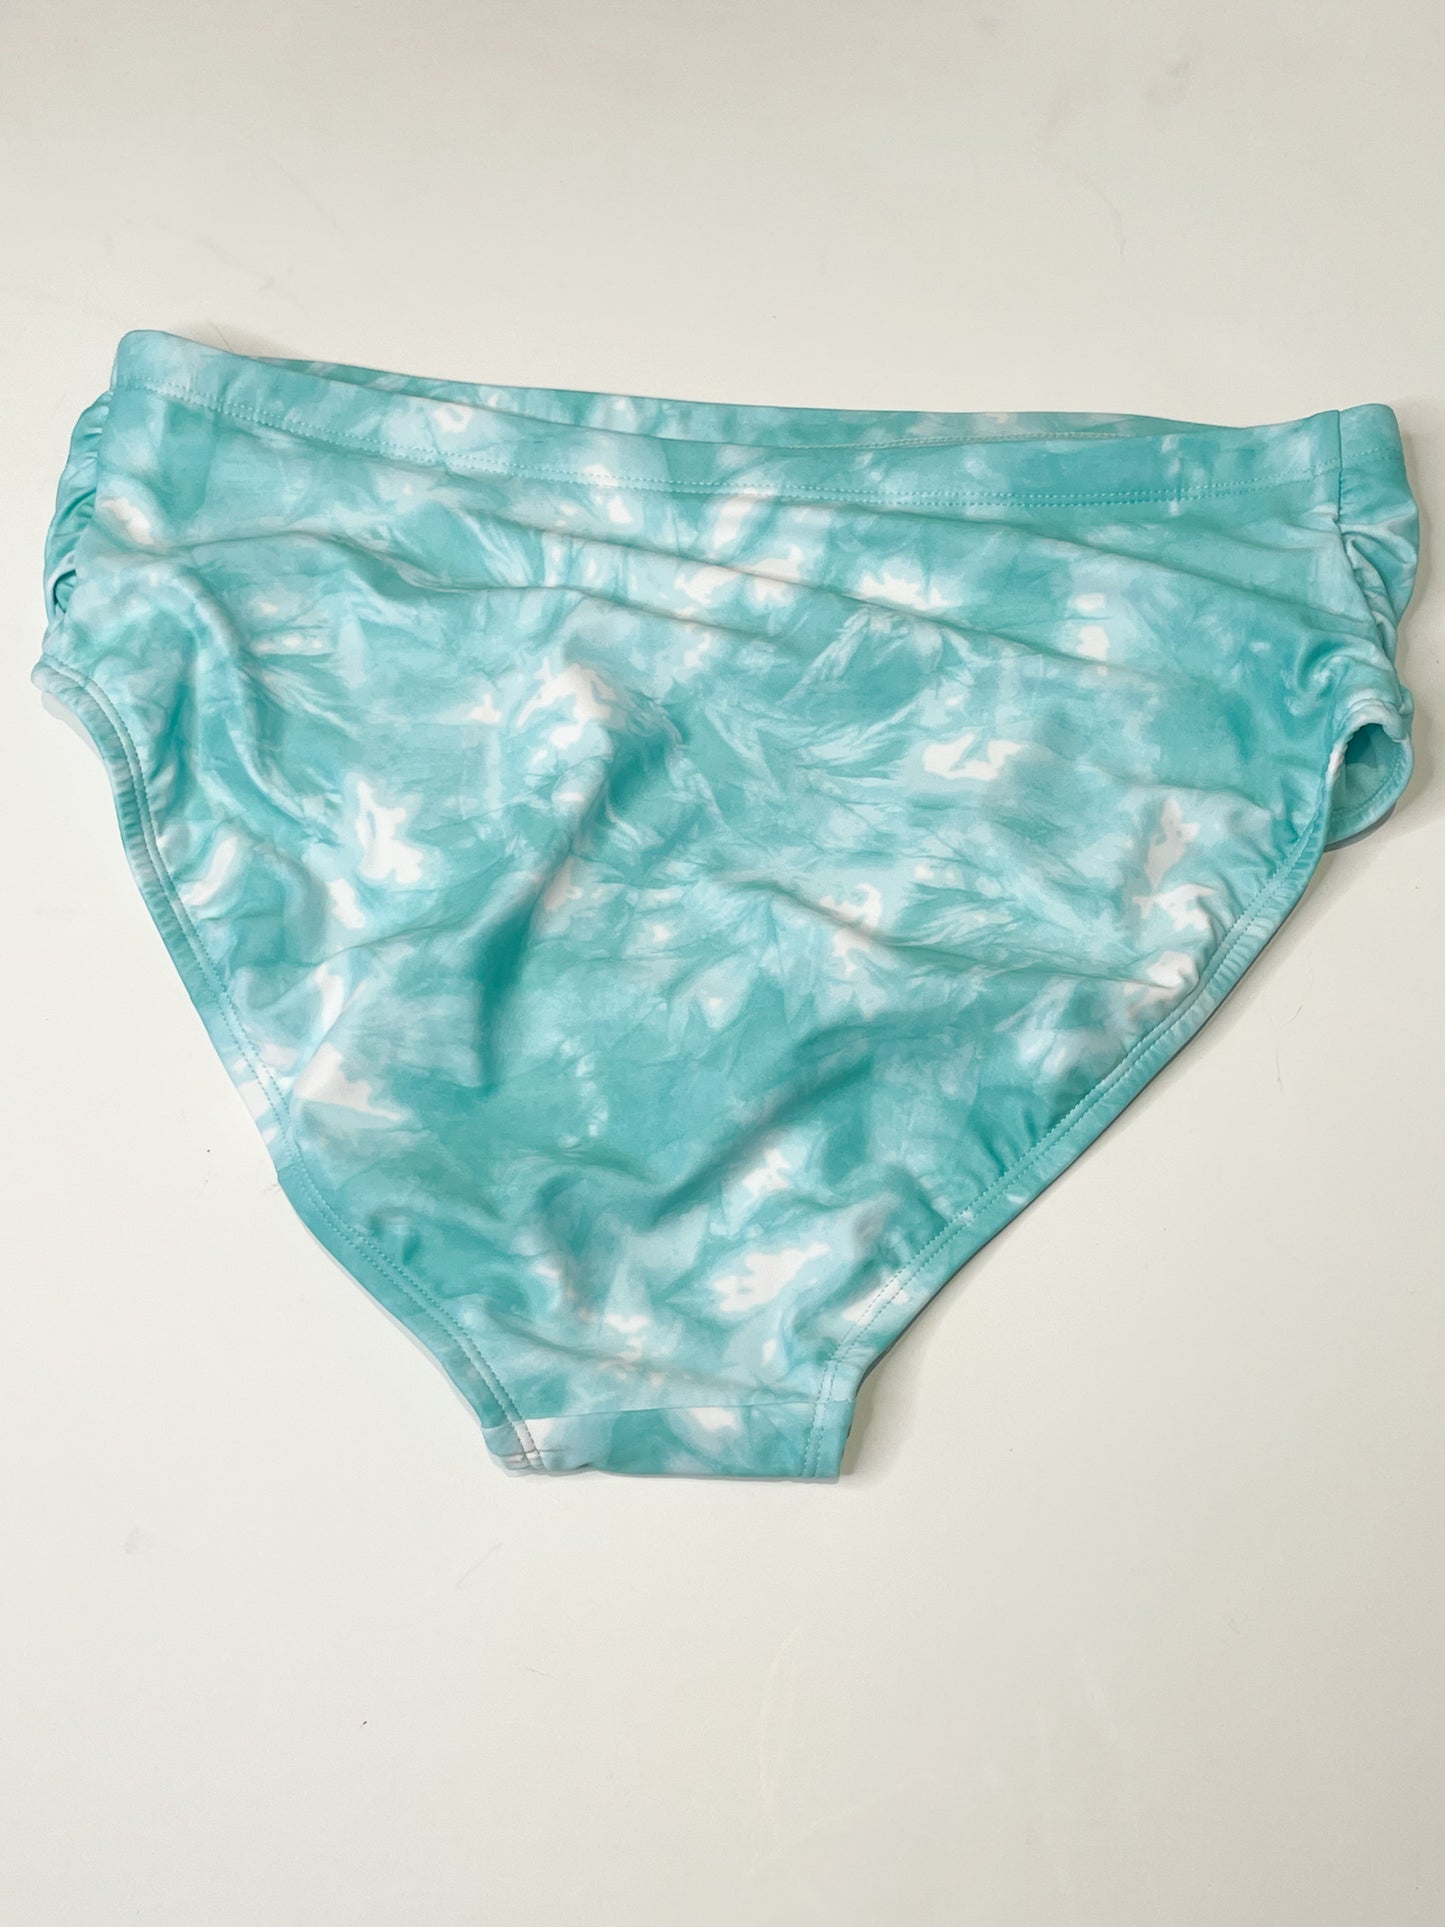 Aqua Blue High Waist Tie-Dyed Bikini Bottoms - L/XL